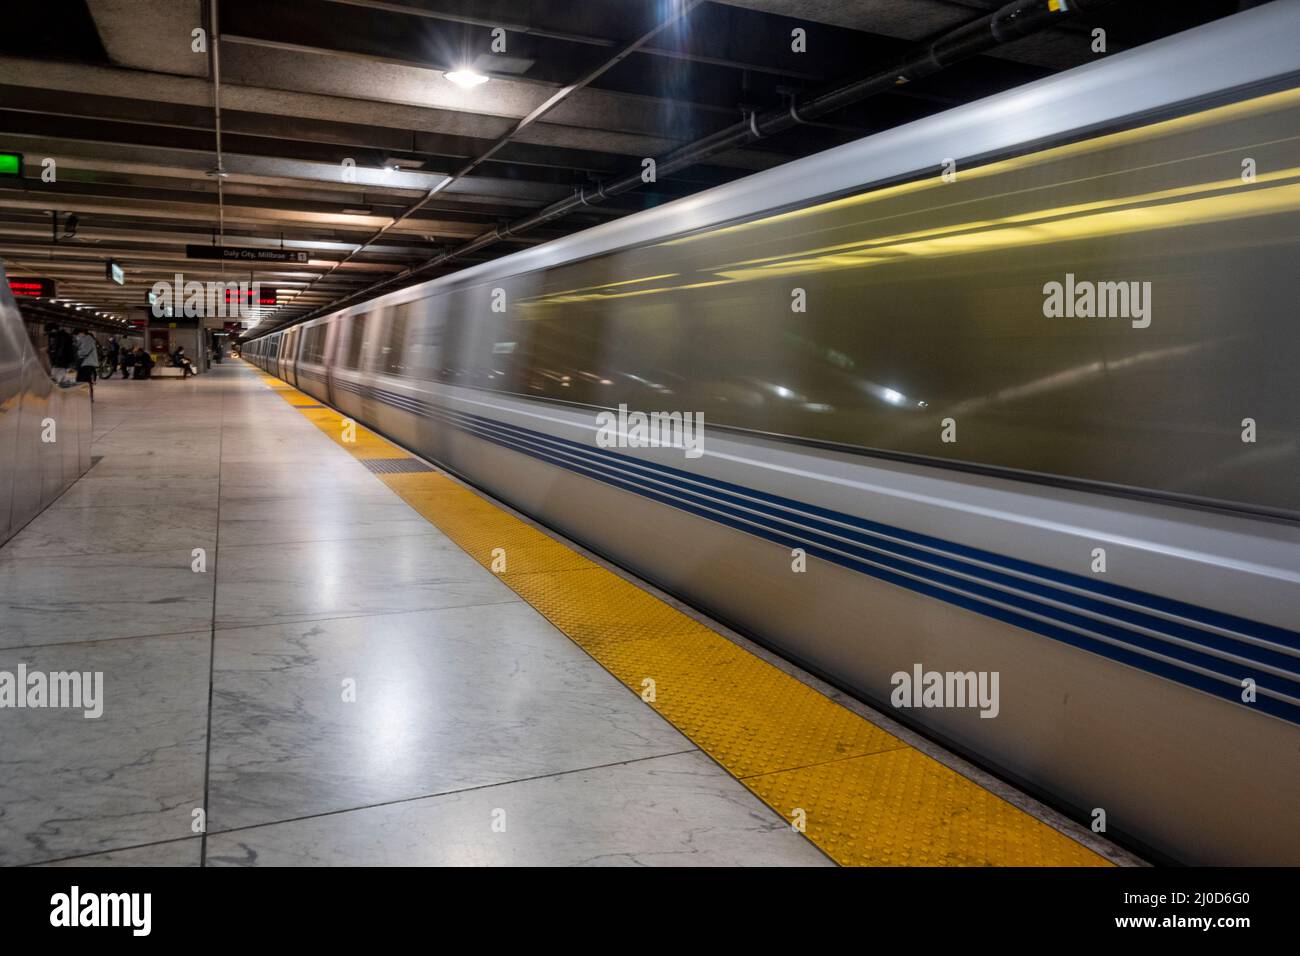 Bart railway system San Francisco. Stock Photo